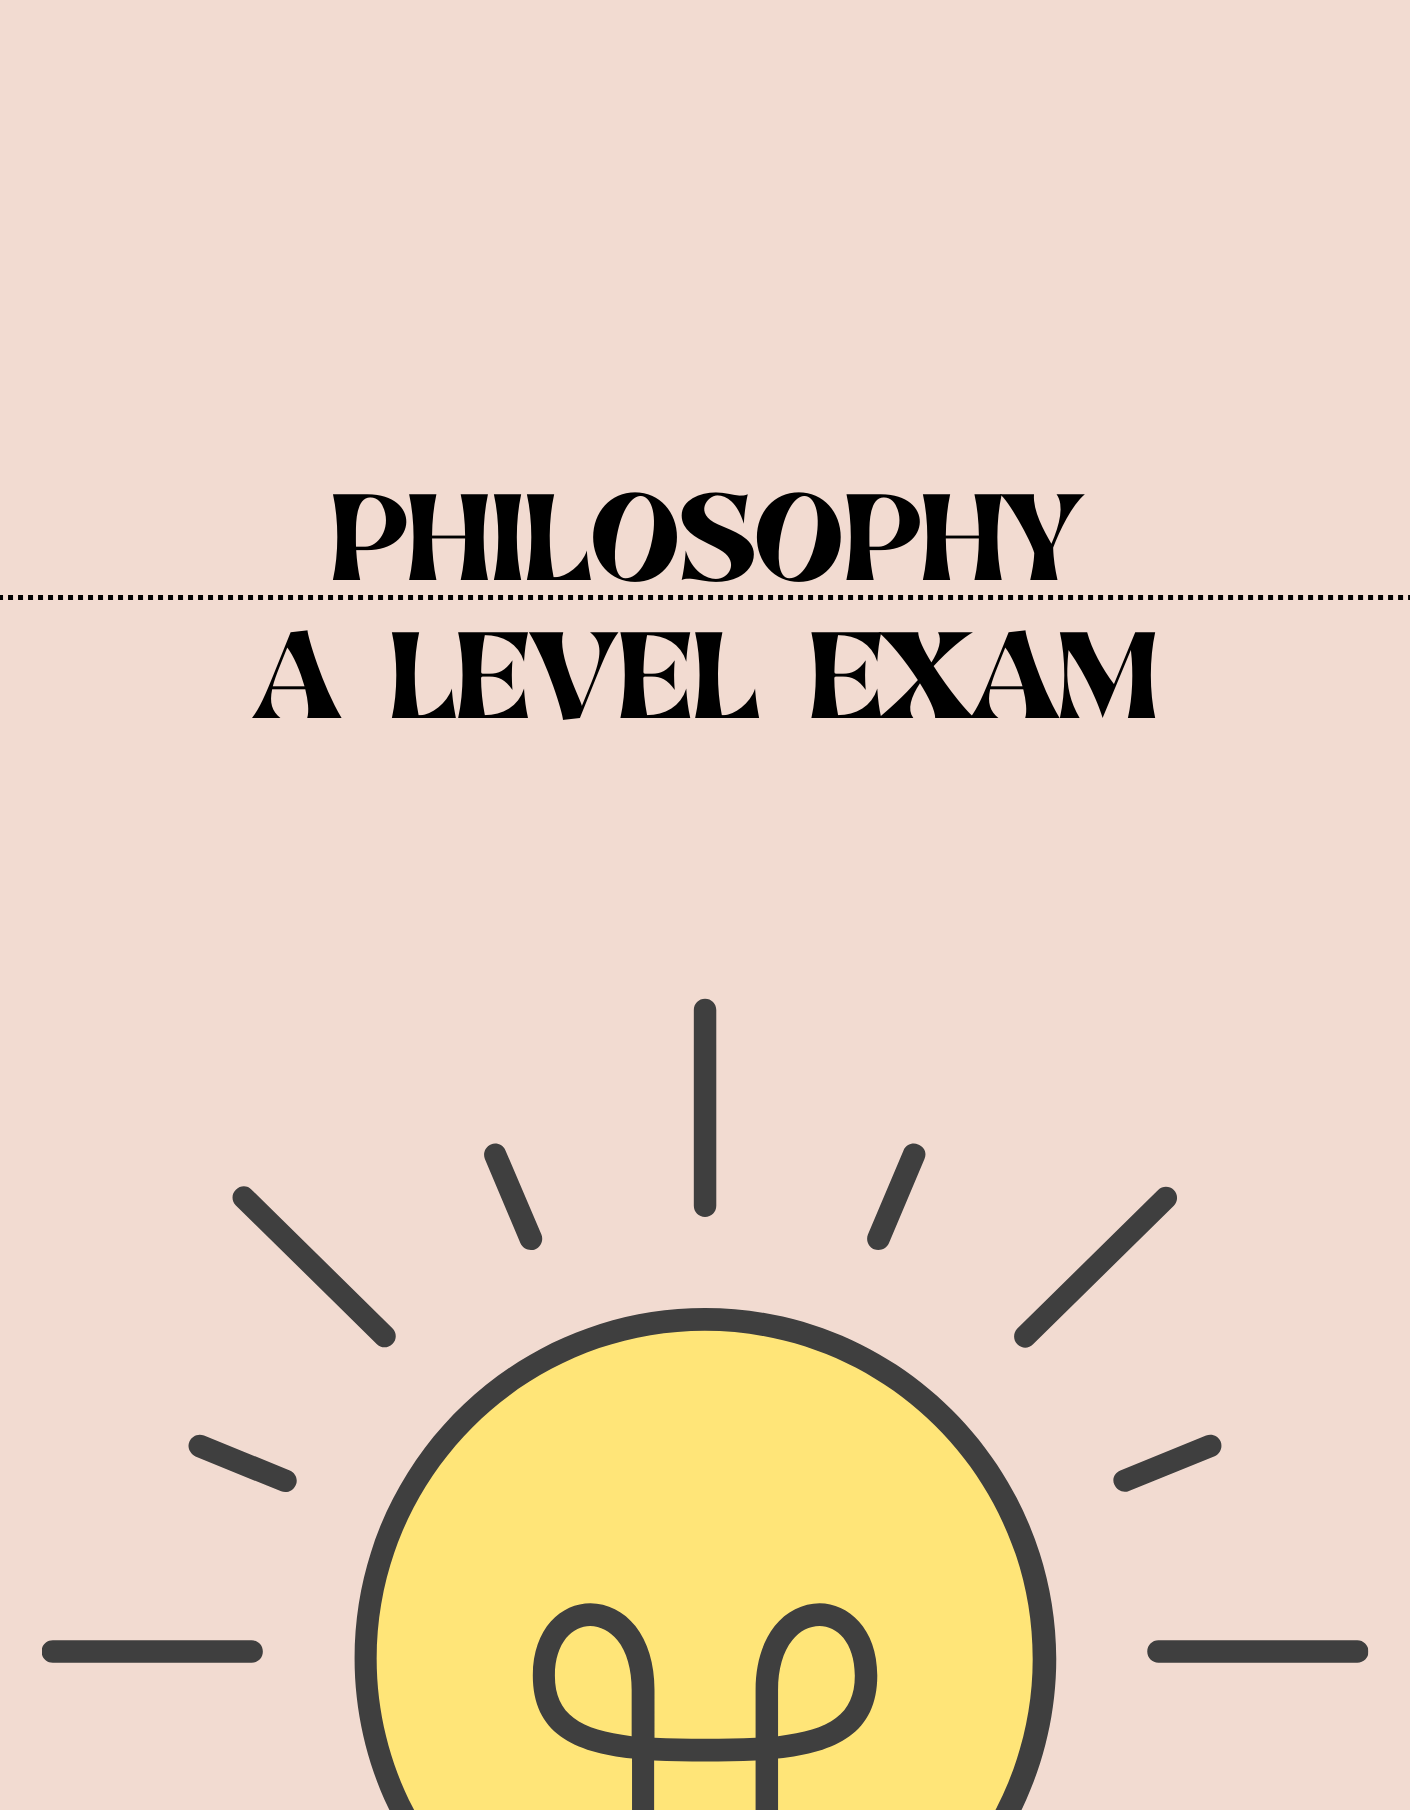 A Level - Philosophy Exam - Exam Centre Birmingham Limited